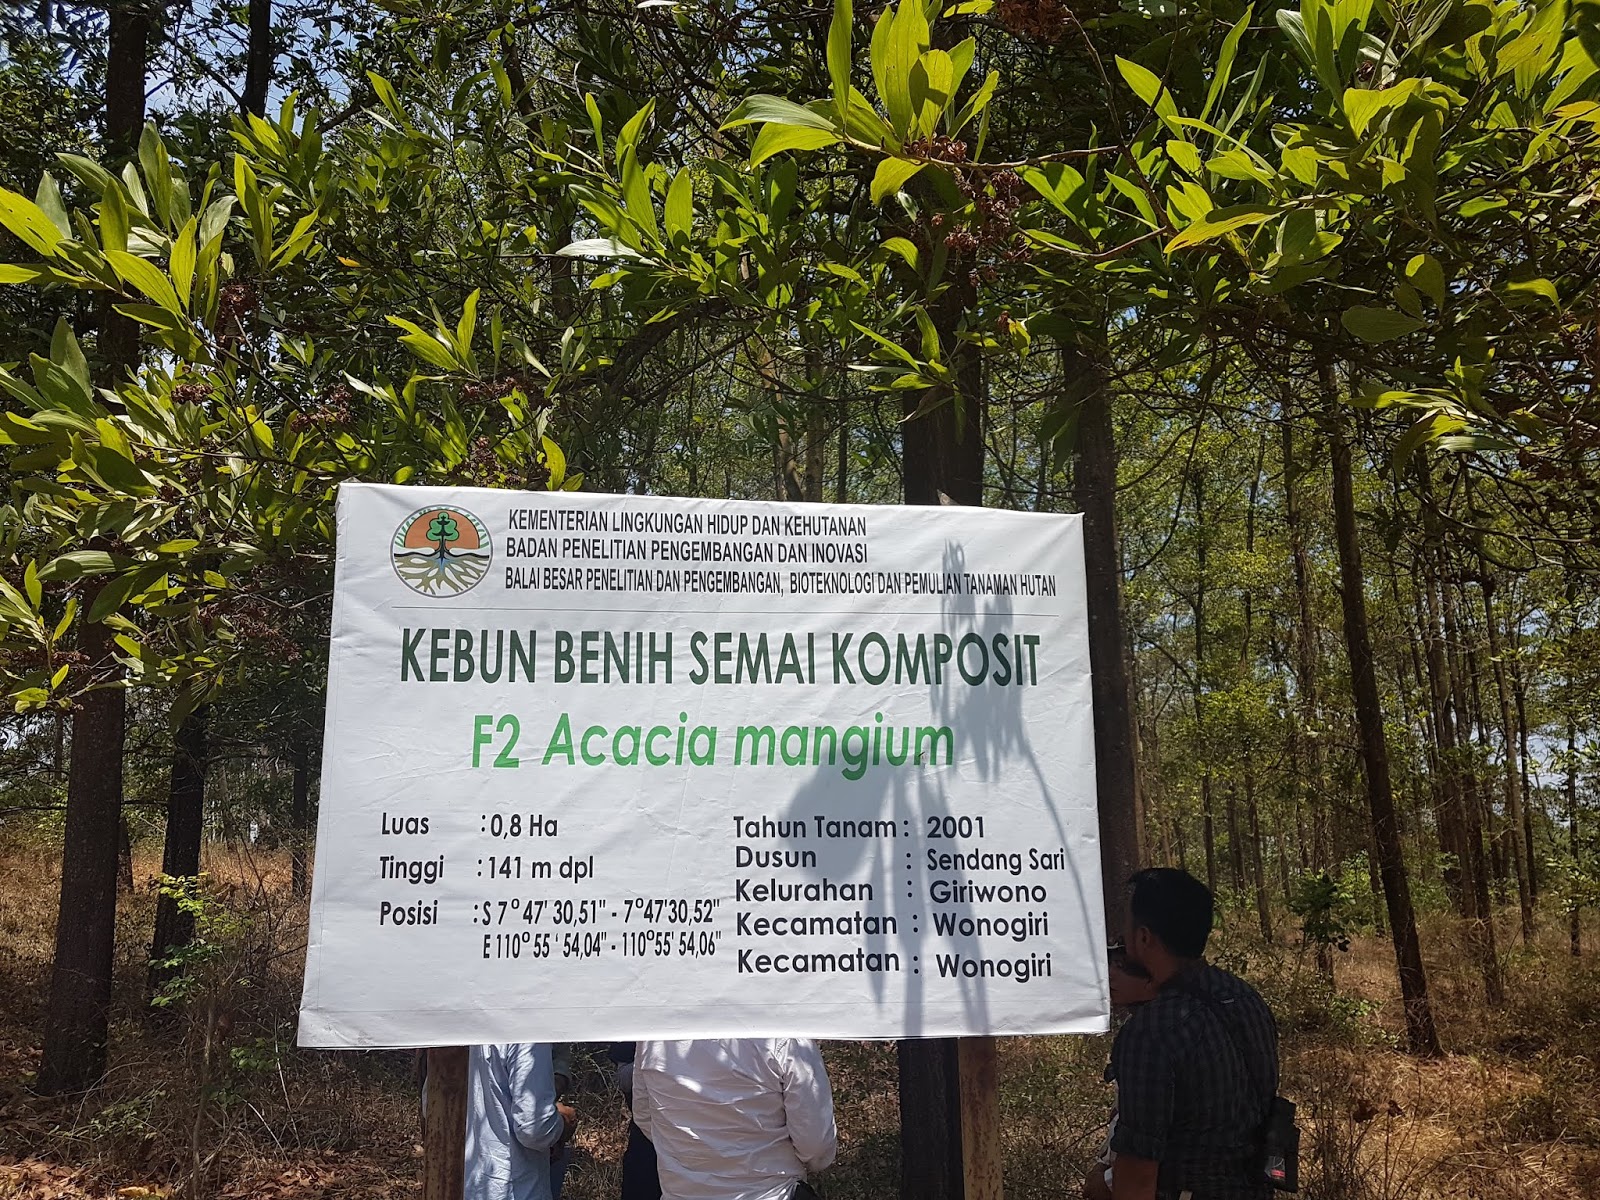 Kebun Benih Semai Komposit Acacia mangium - PLANTER AND FORESTER